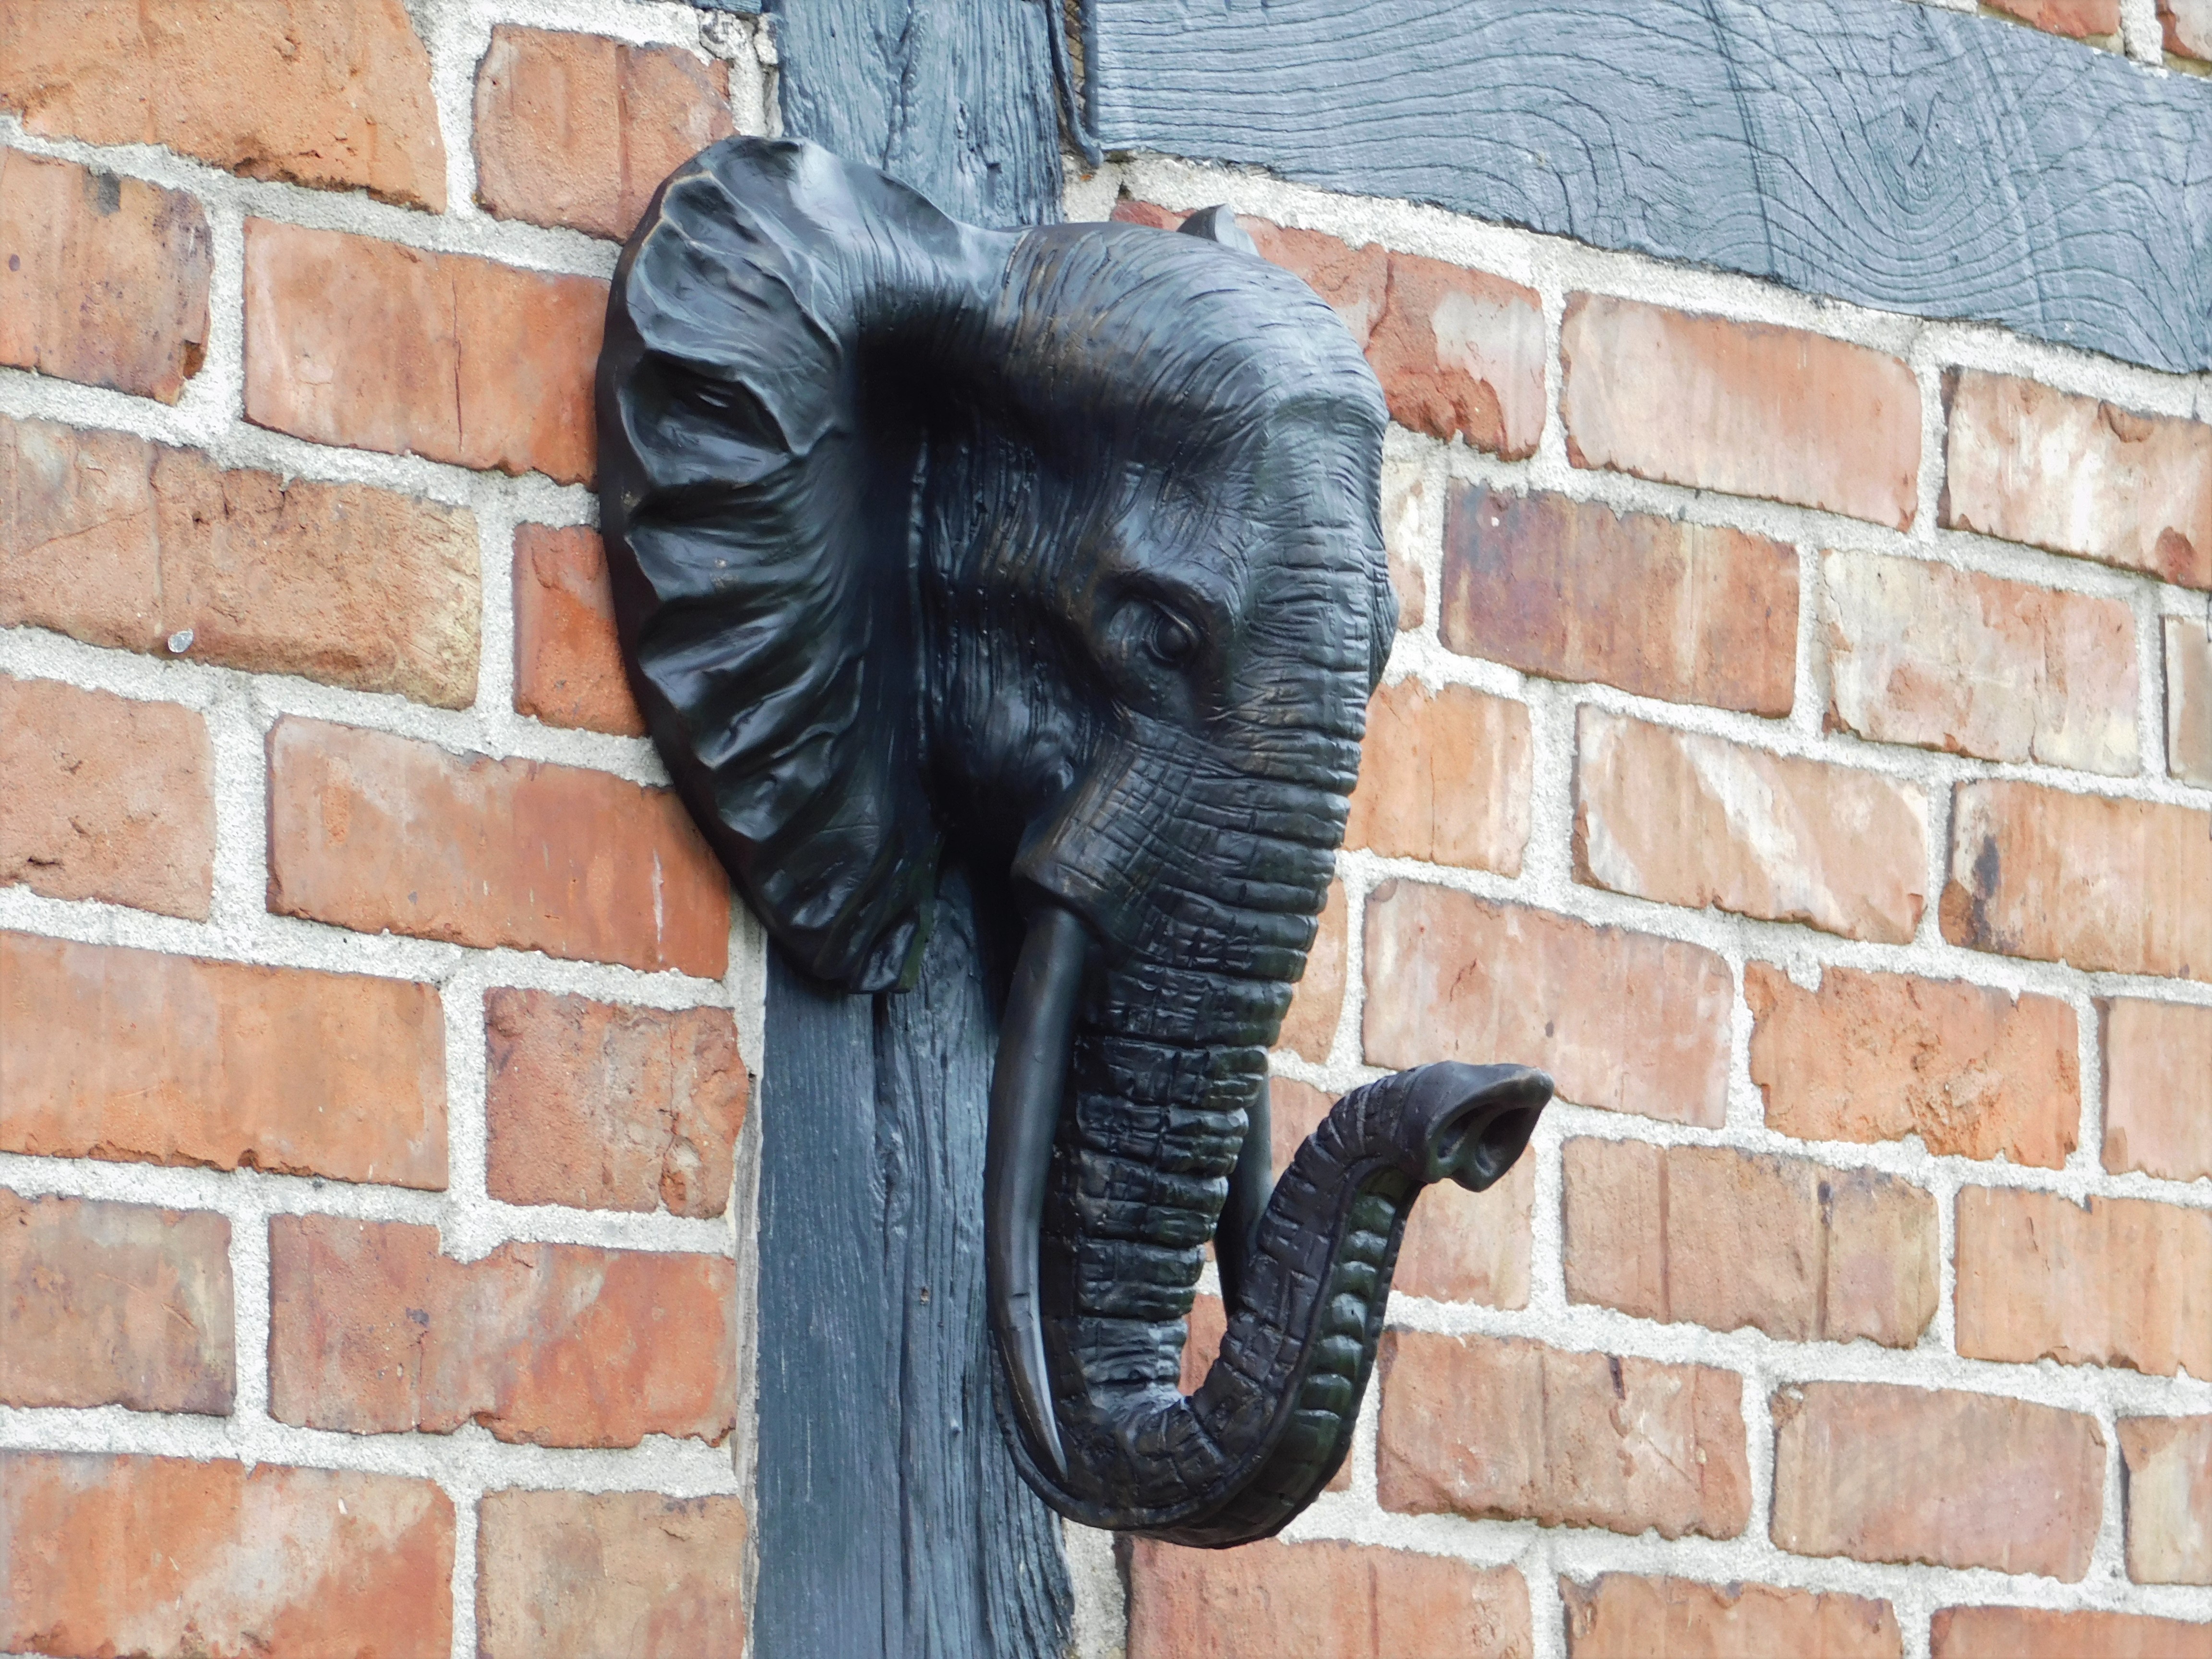 Black Elephant Head - Wall decoration - Polystone